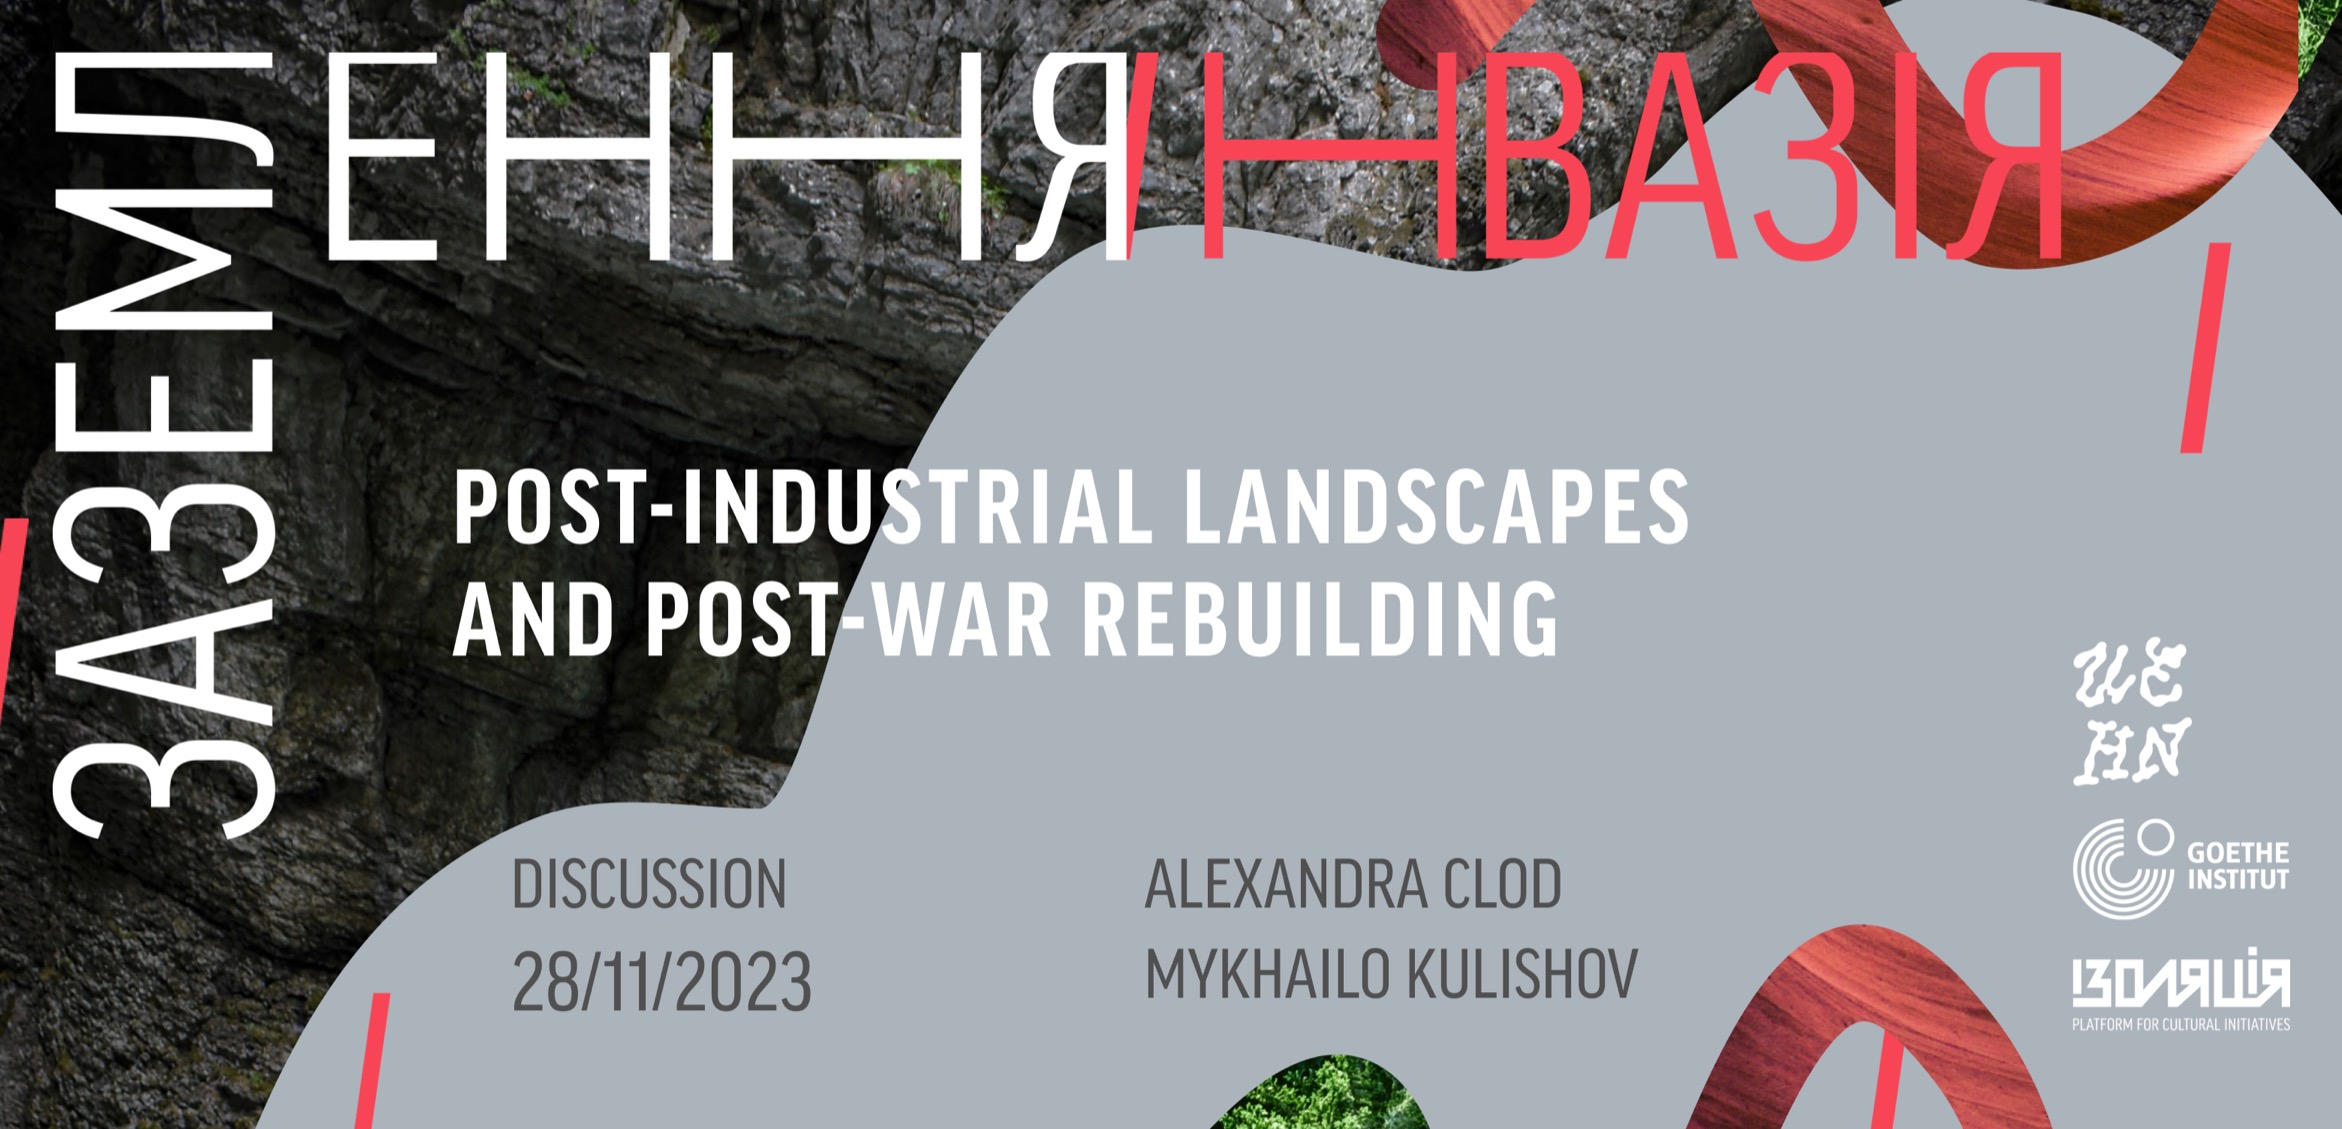 Post-industrial landscapes and post-war rebuilding